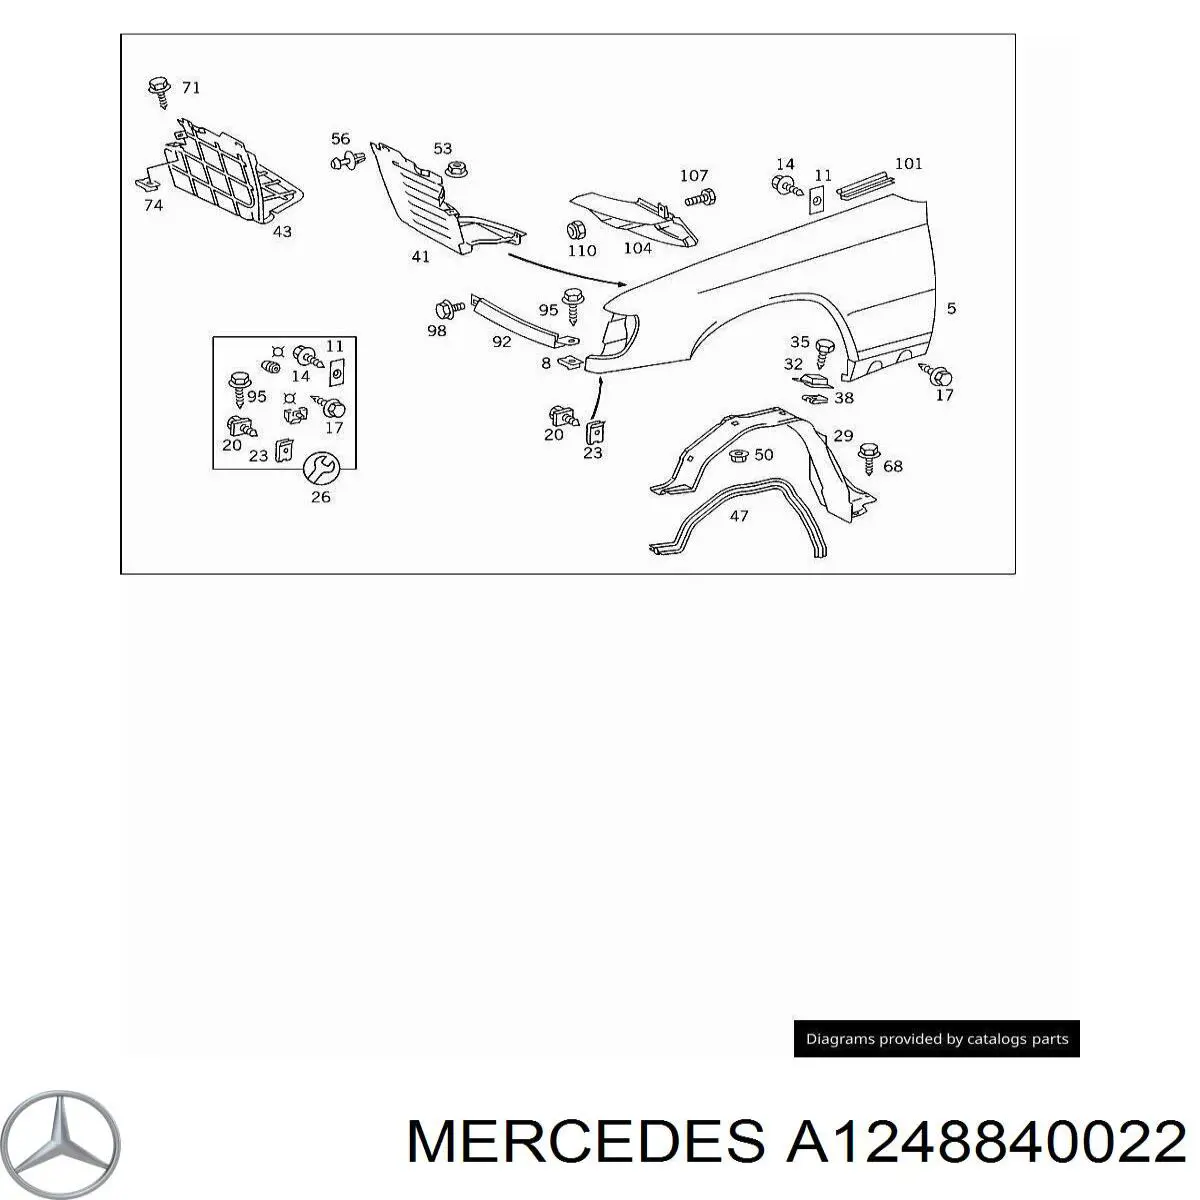 A1248840022 Mercedes